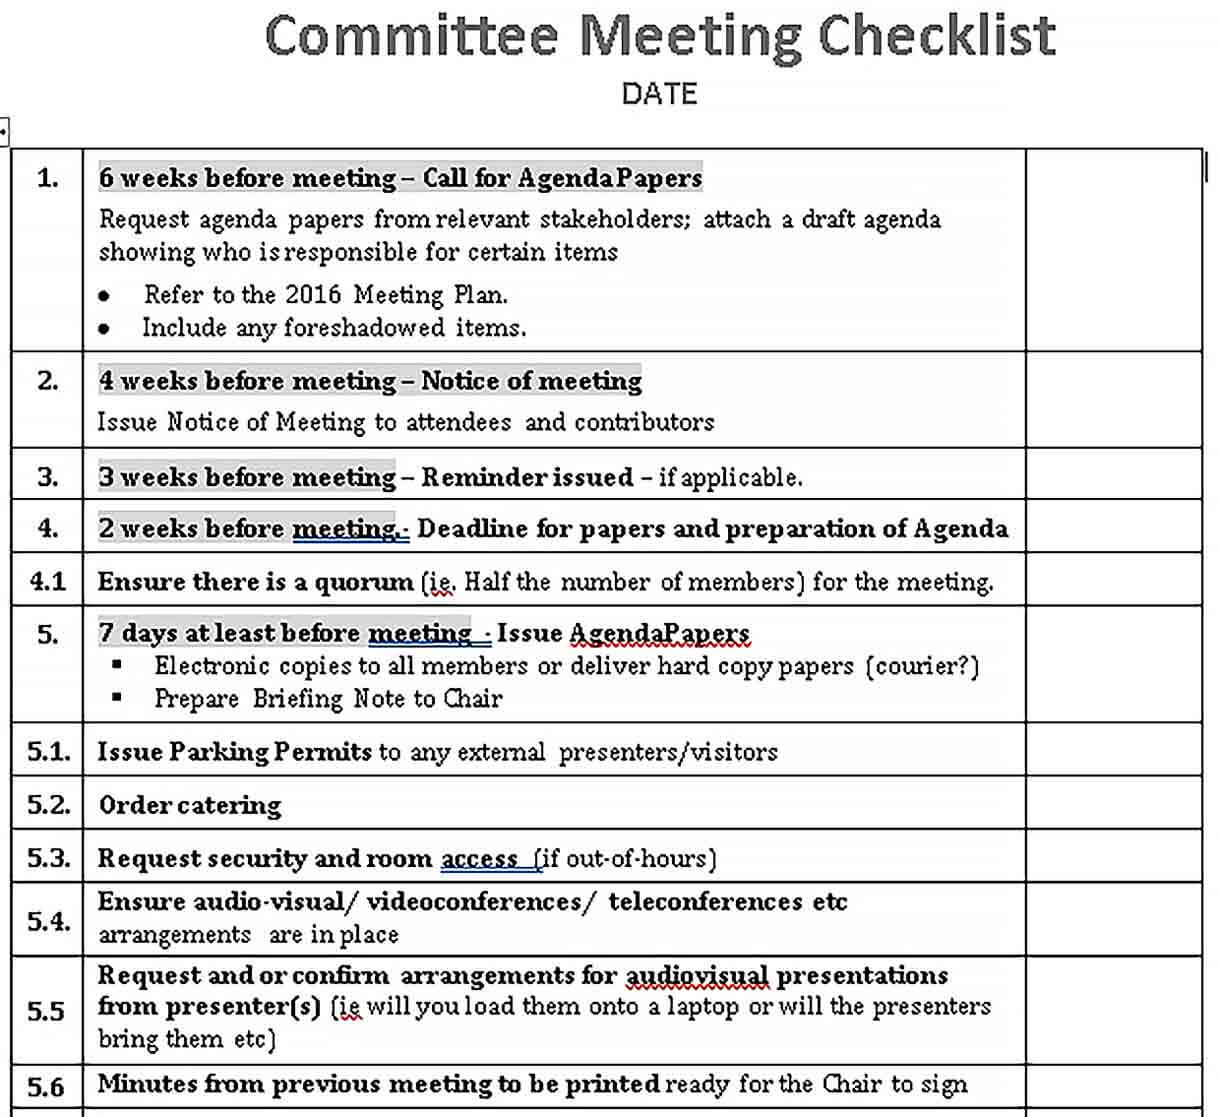 Sample Committee Meeting Checklist 1